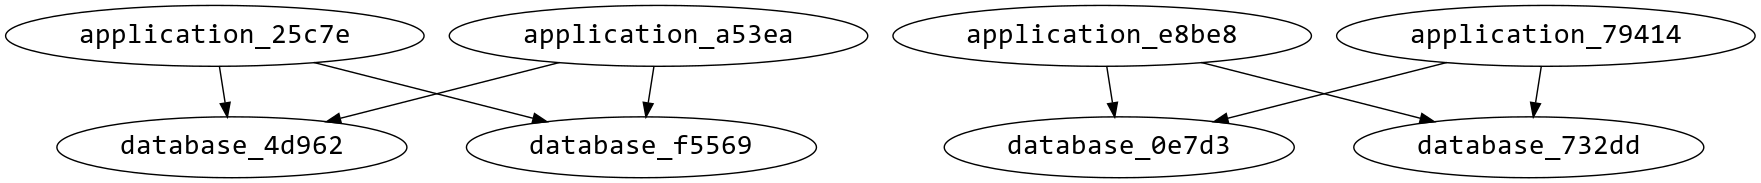 scaling_groups_diagram